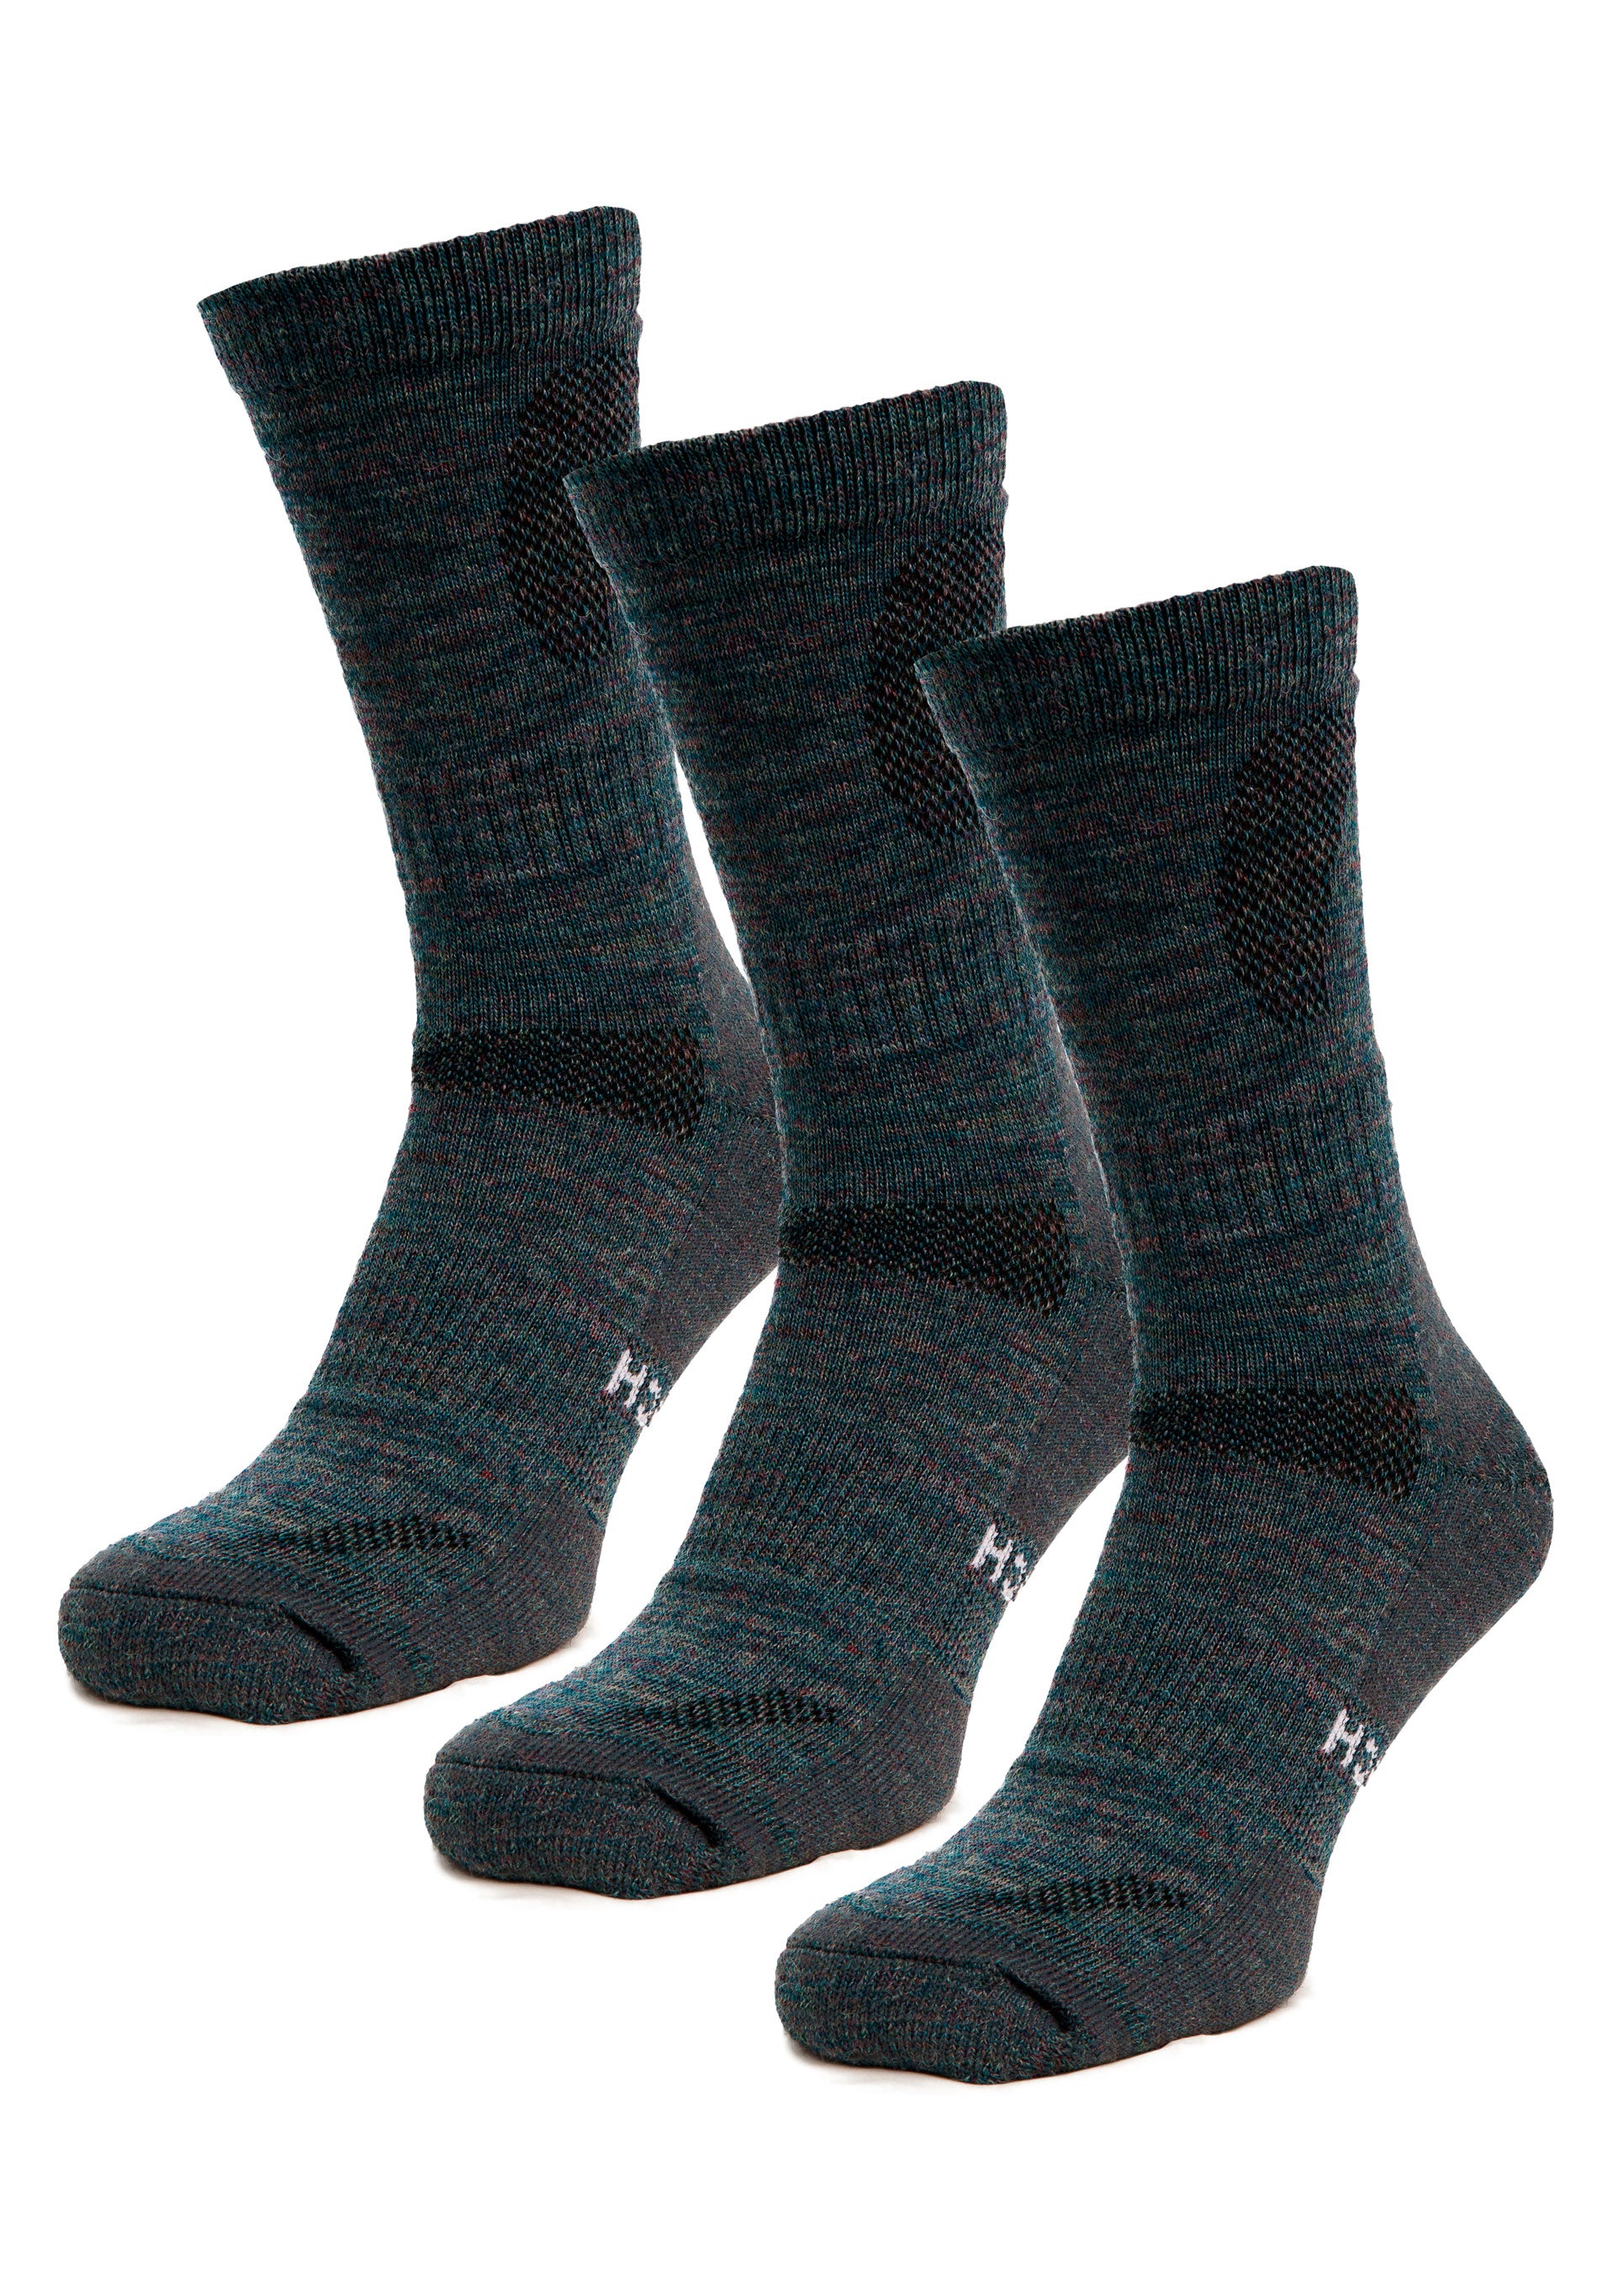 Durable 100% Merino Wool Dark Green Socks for Tourism & Outdoor Sports ...